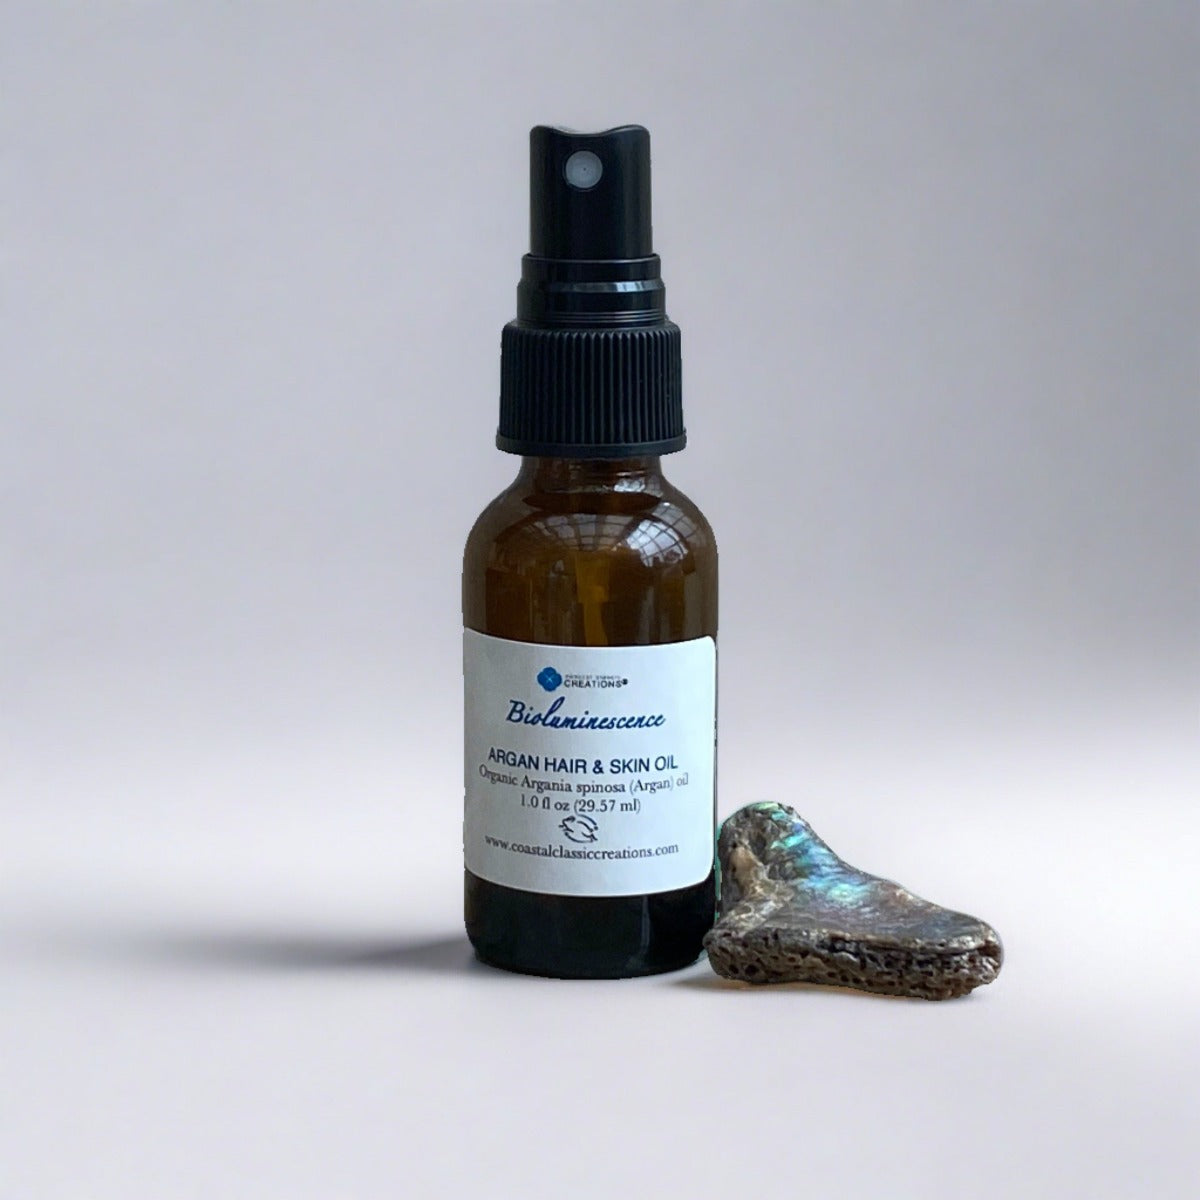 A bottle of bioluminescence Argan Hair & Skin Oil  with a spray top